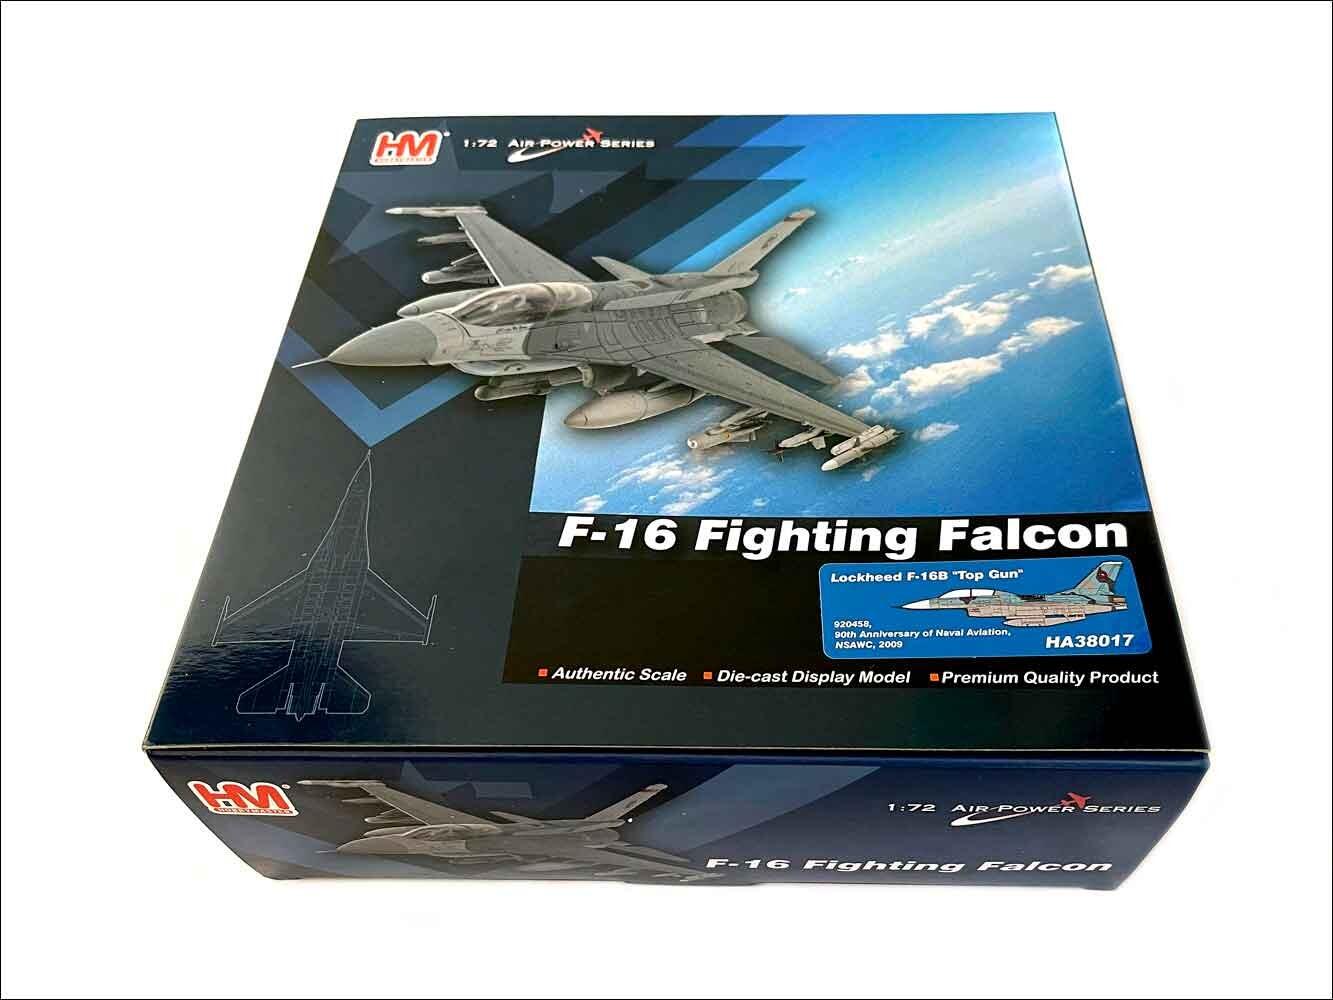 Lockheed F-16B “Top Gun” 1/72